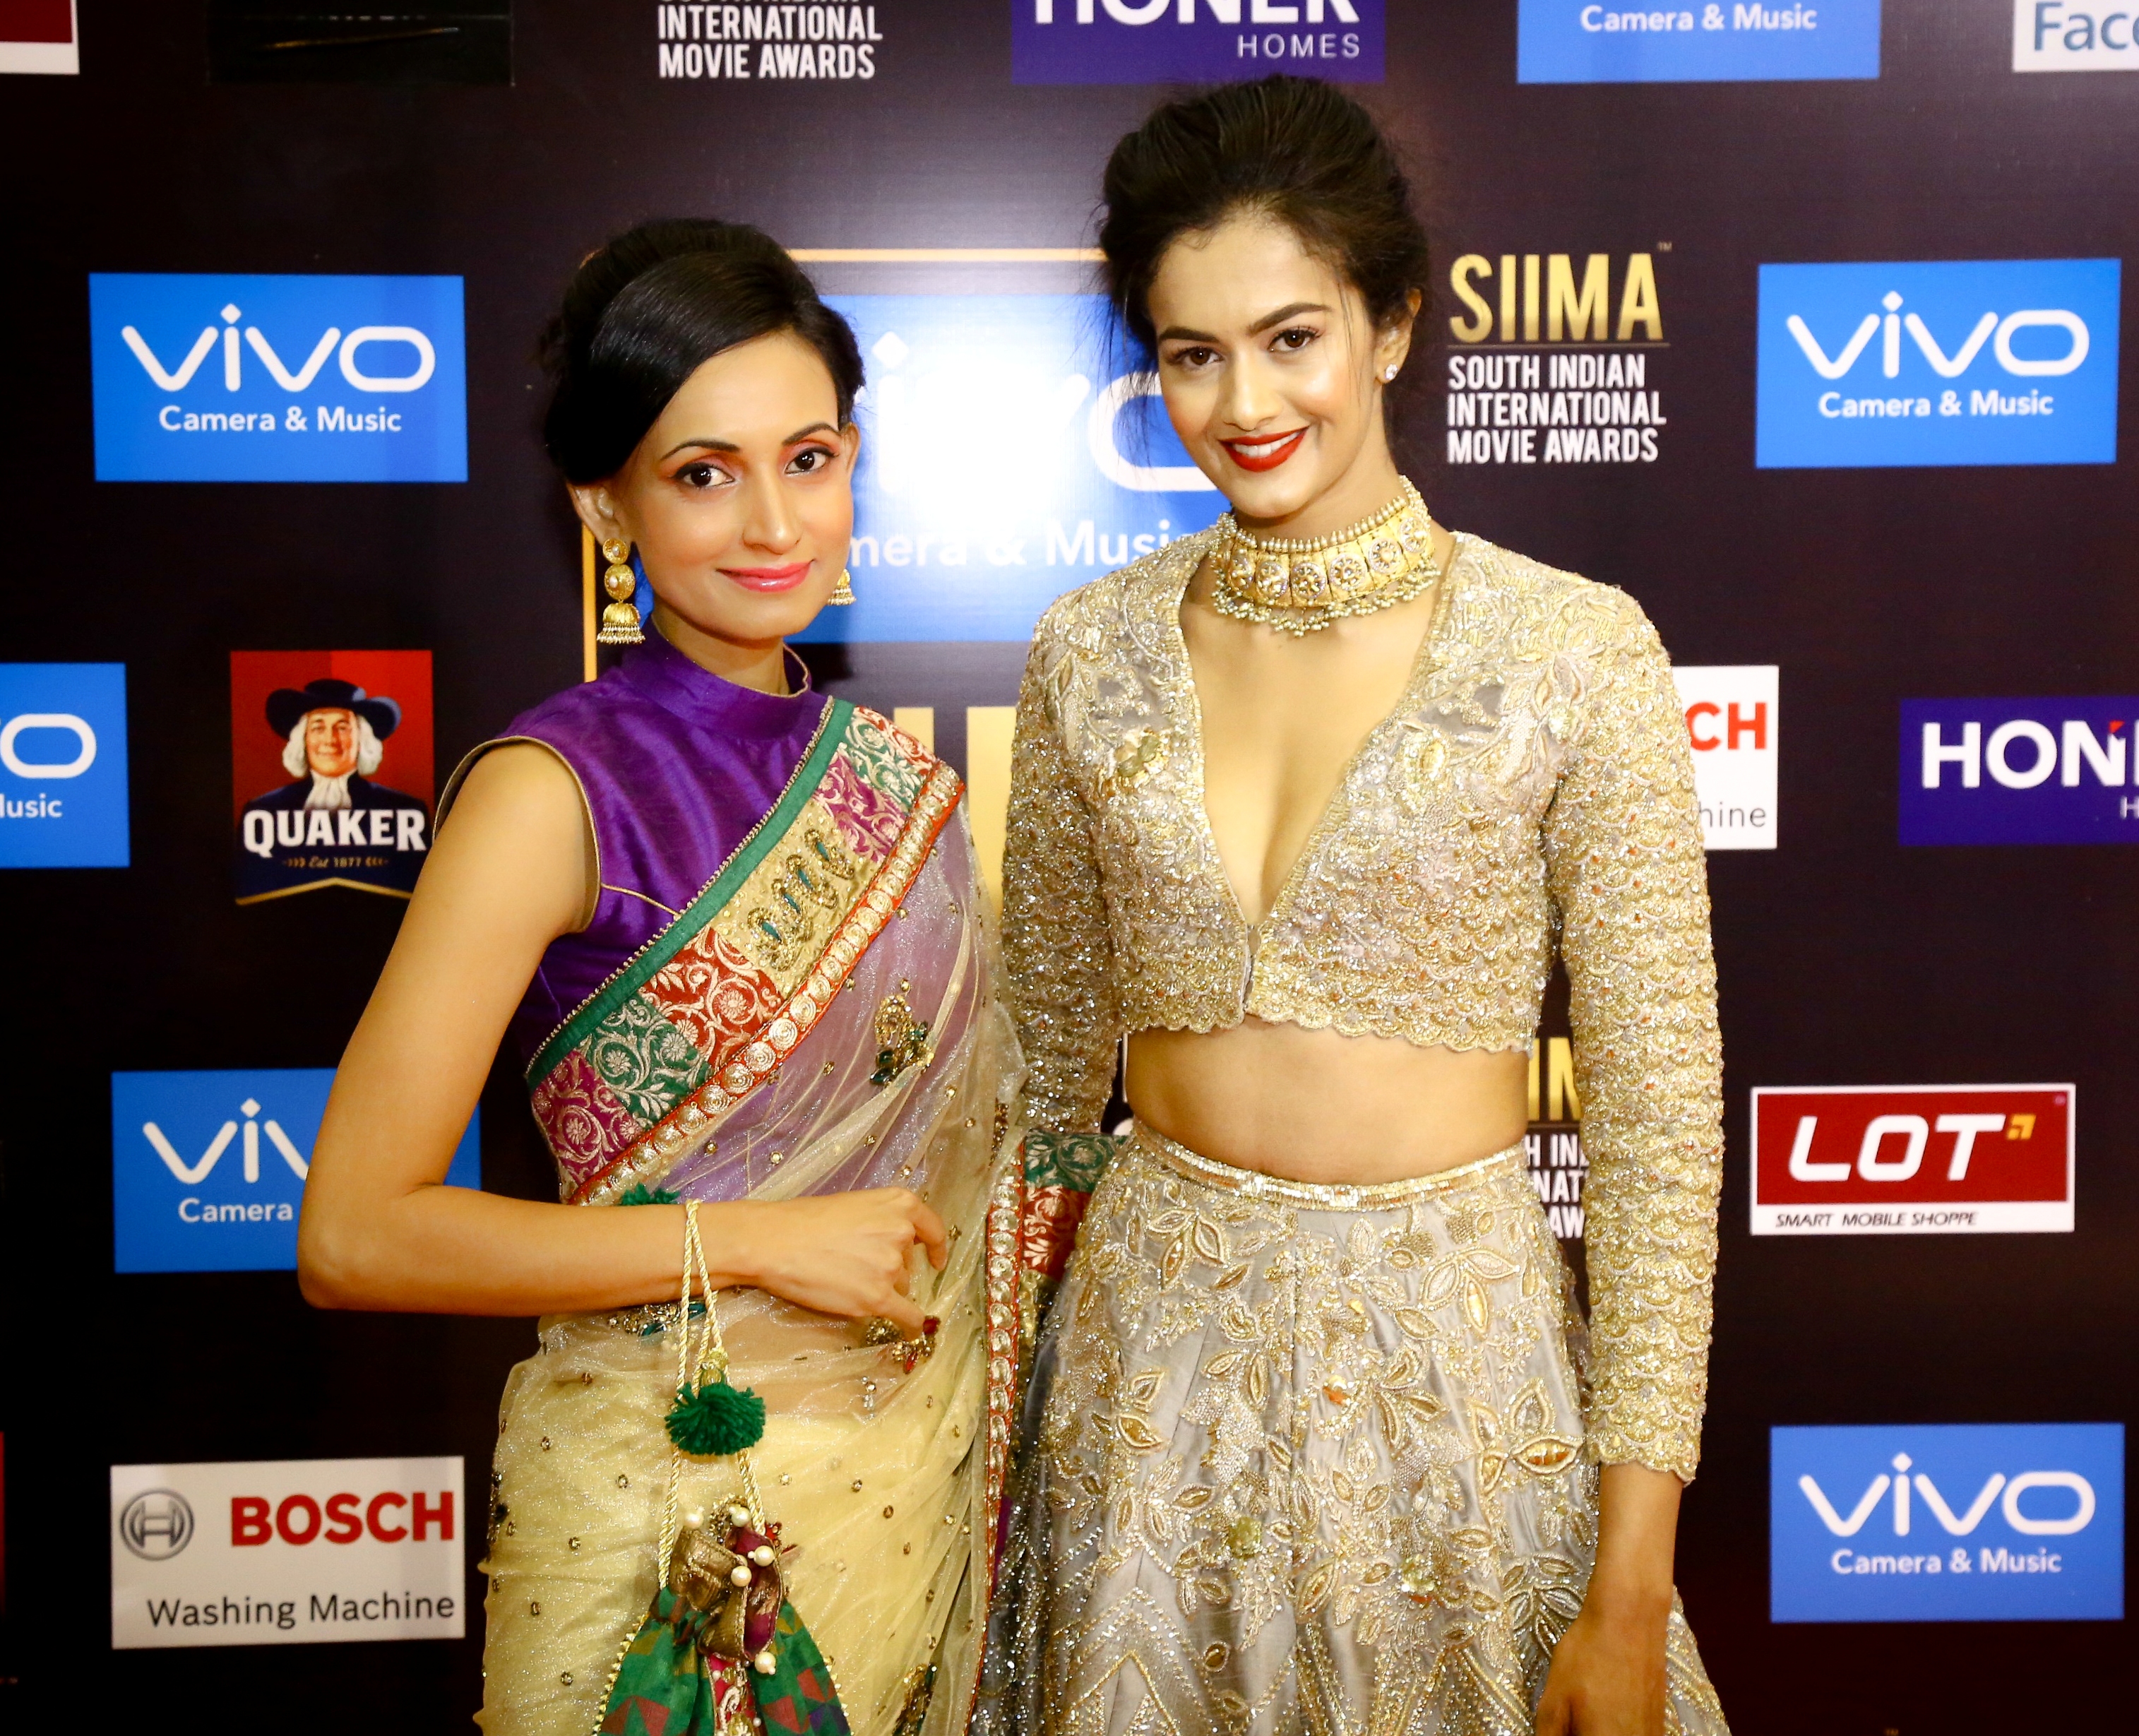 The South Indian International Movie Awards SIIMA